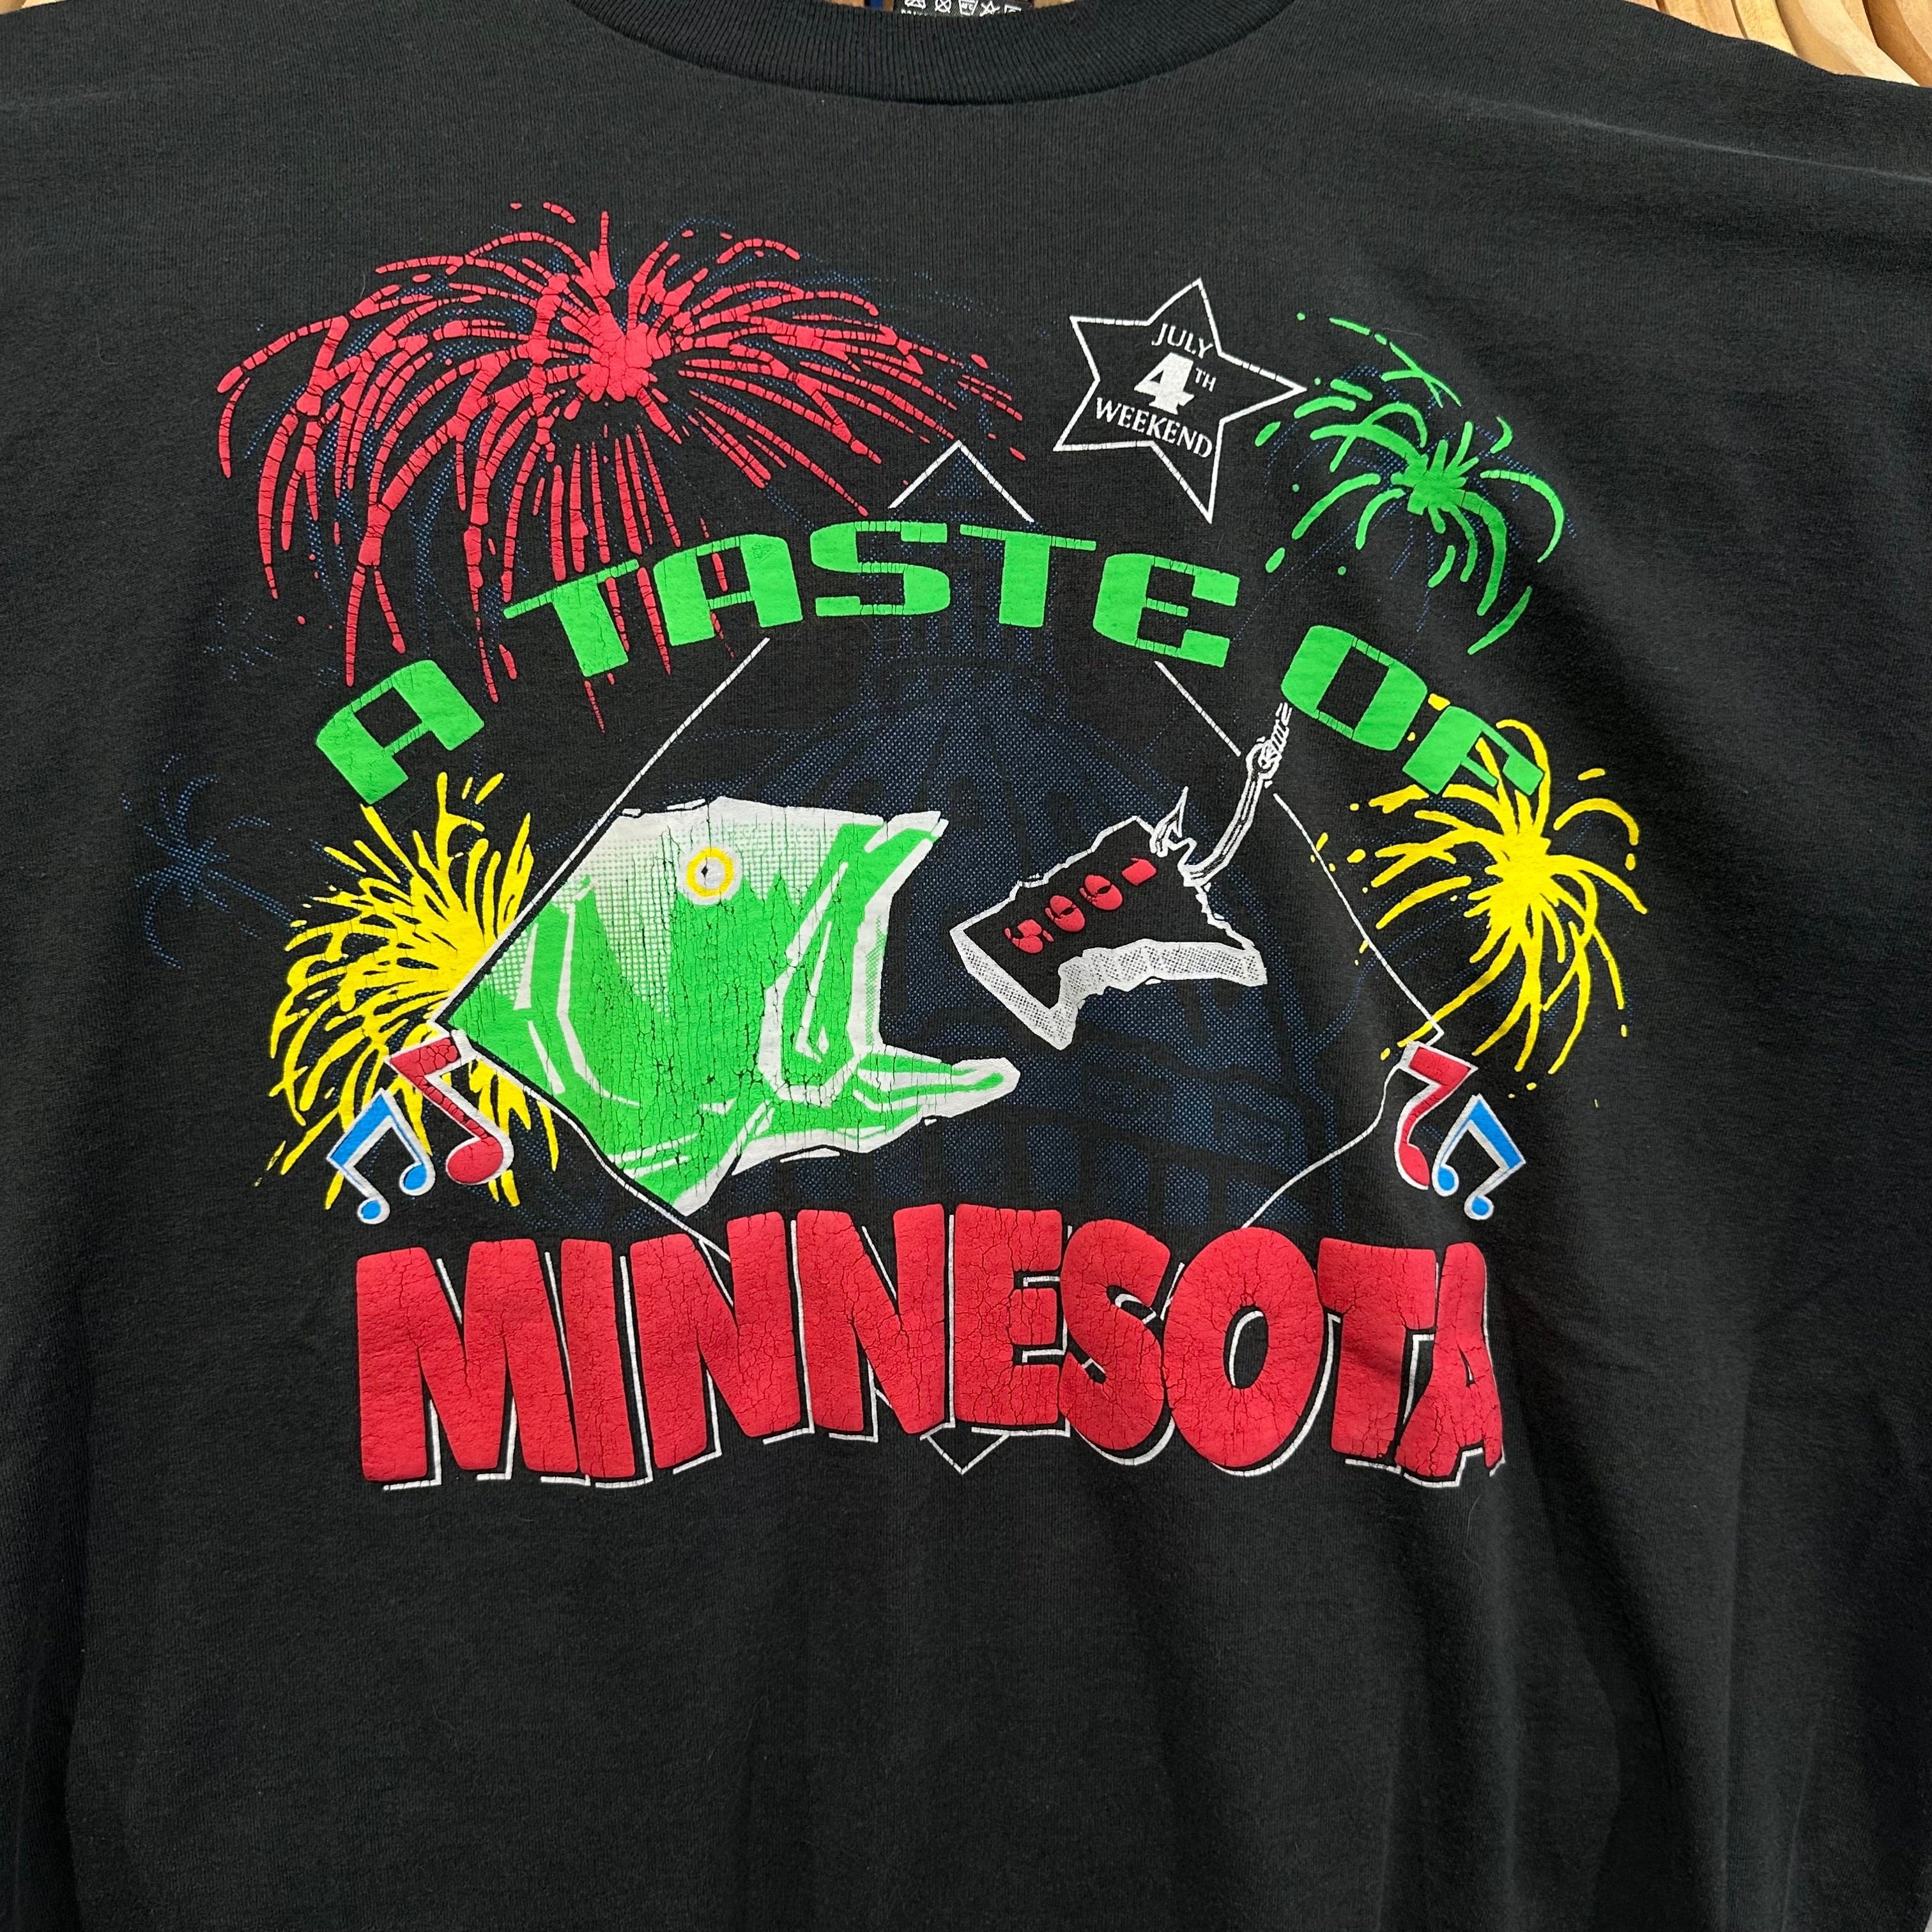 Taste of Minnesota 1995 T-Shirt